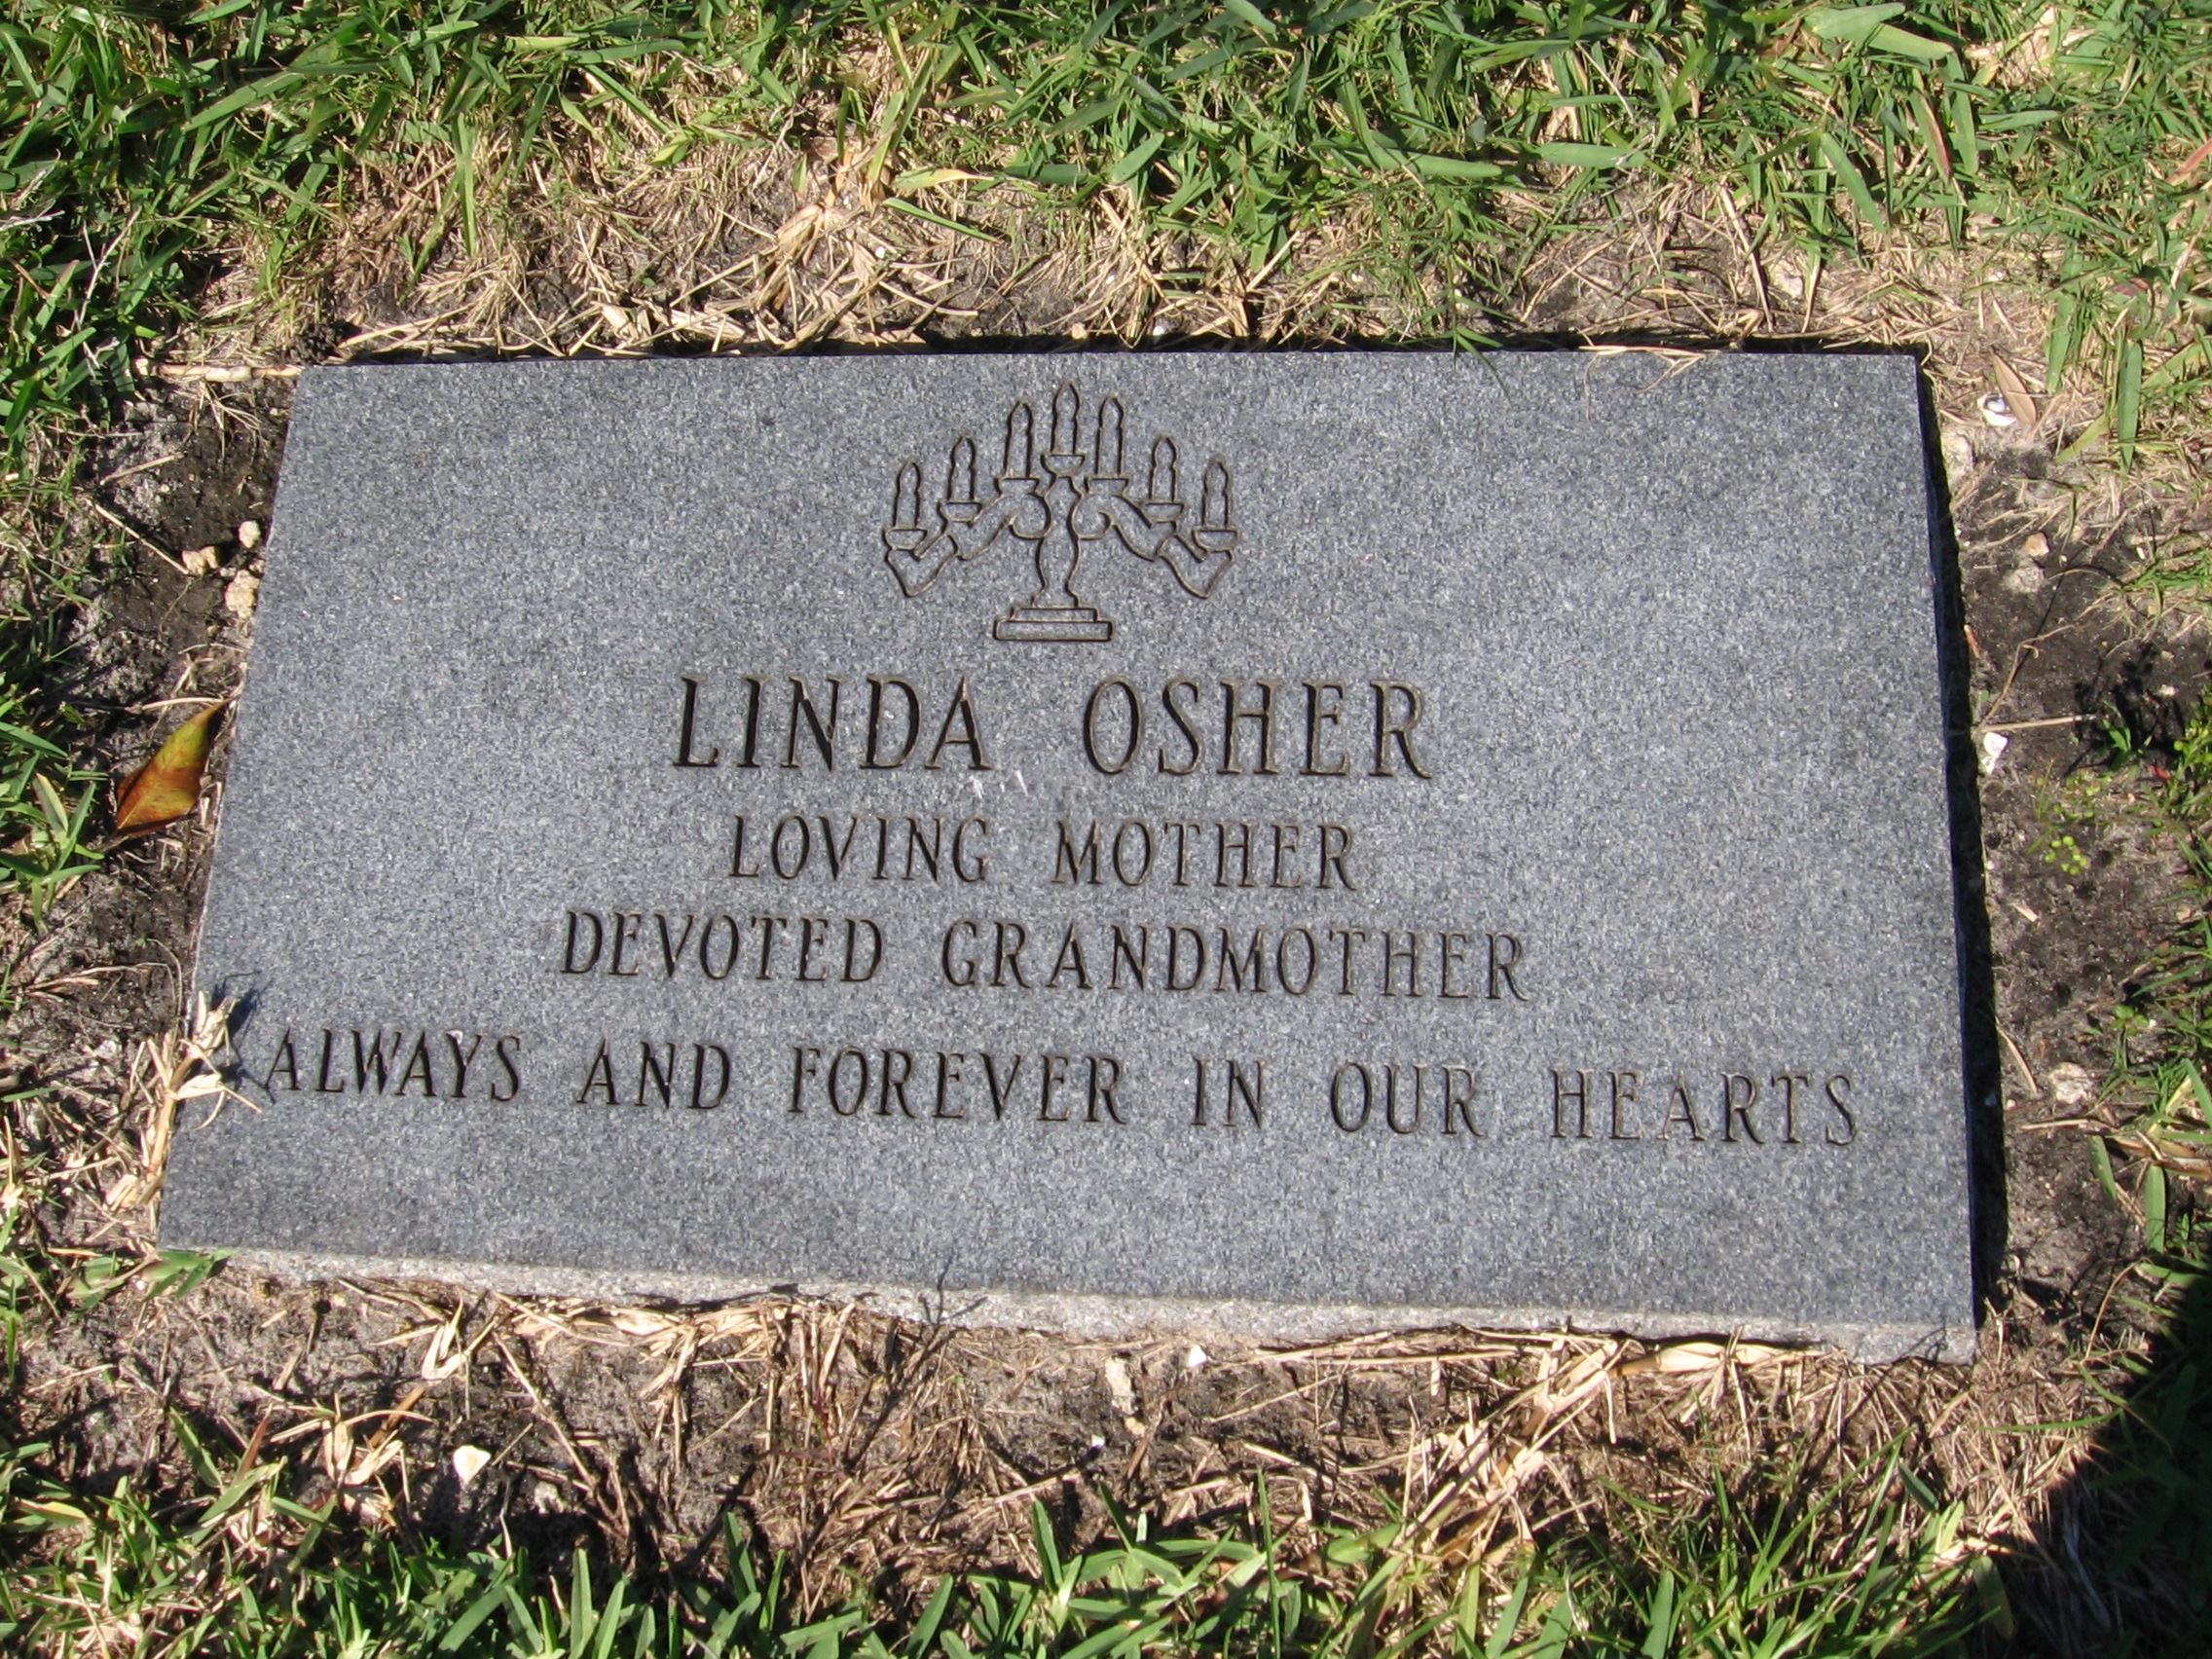 Linda Osher